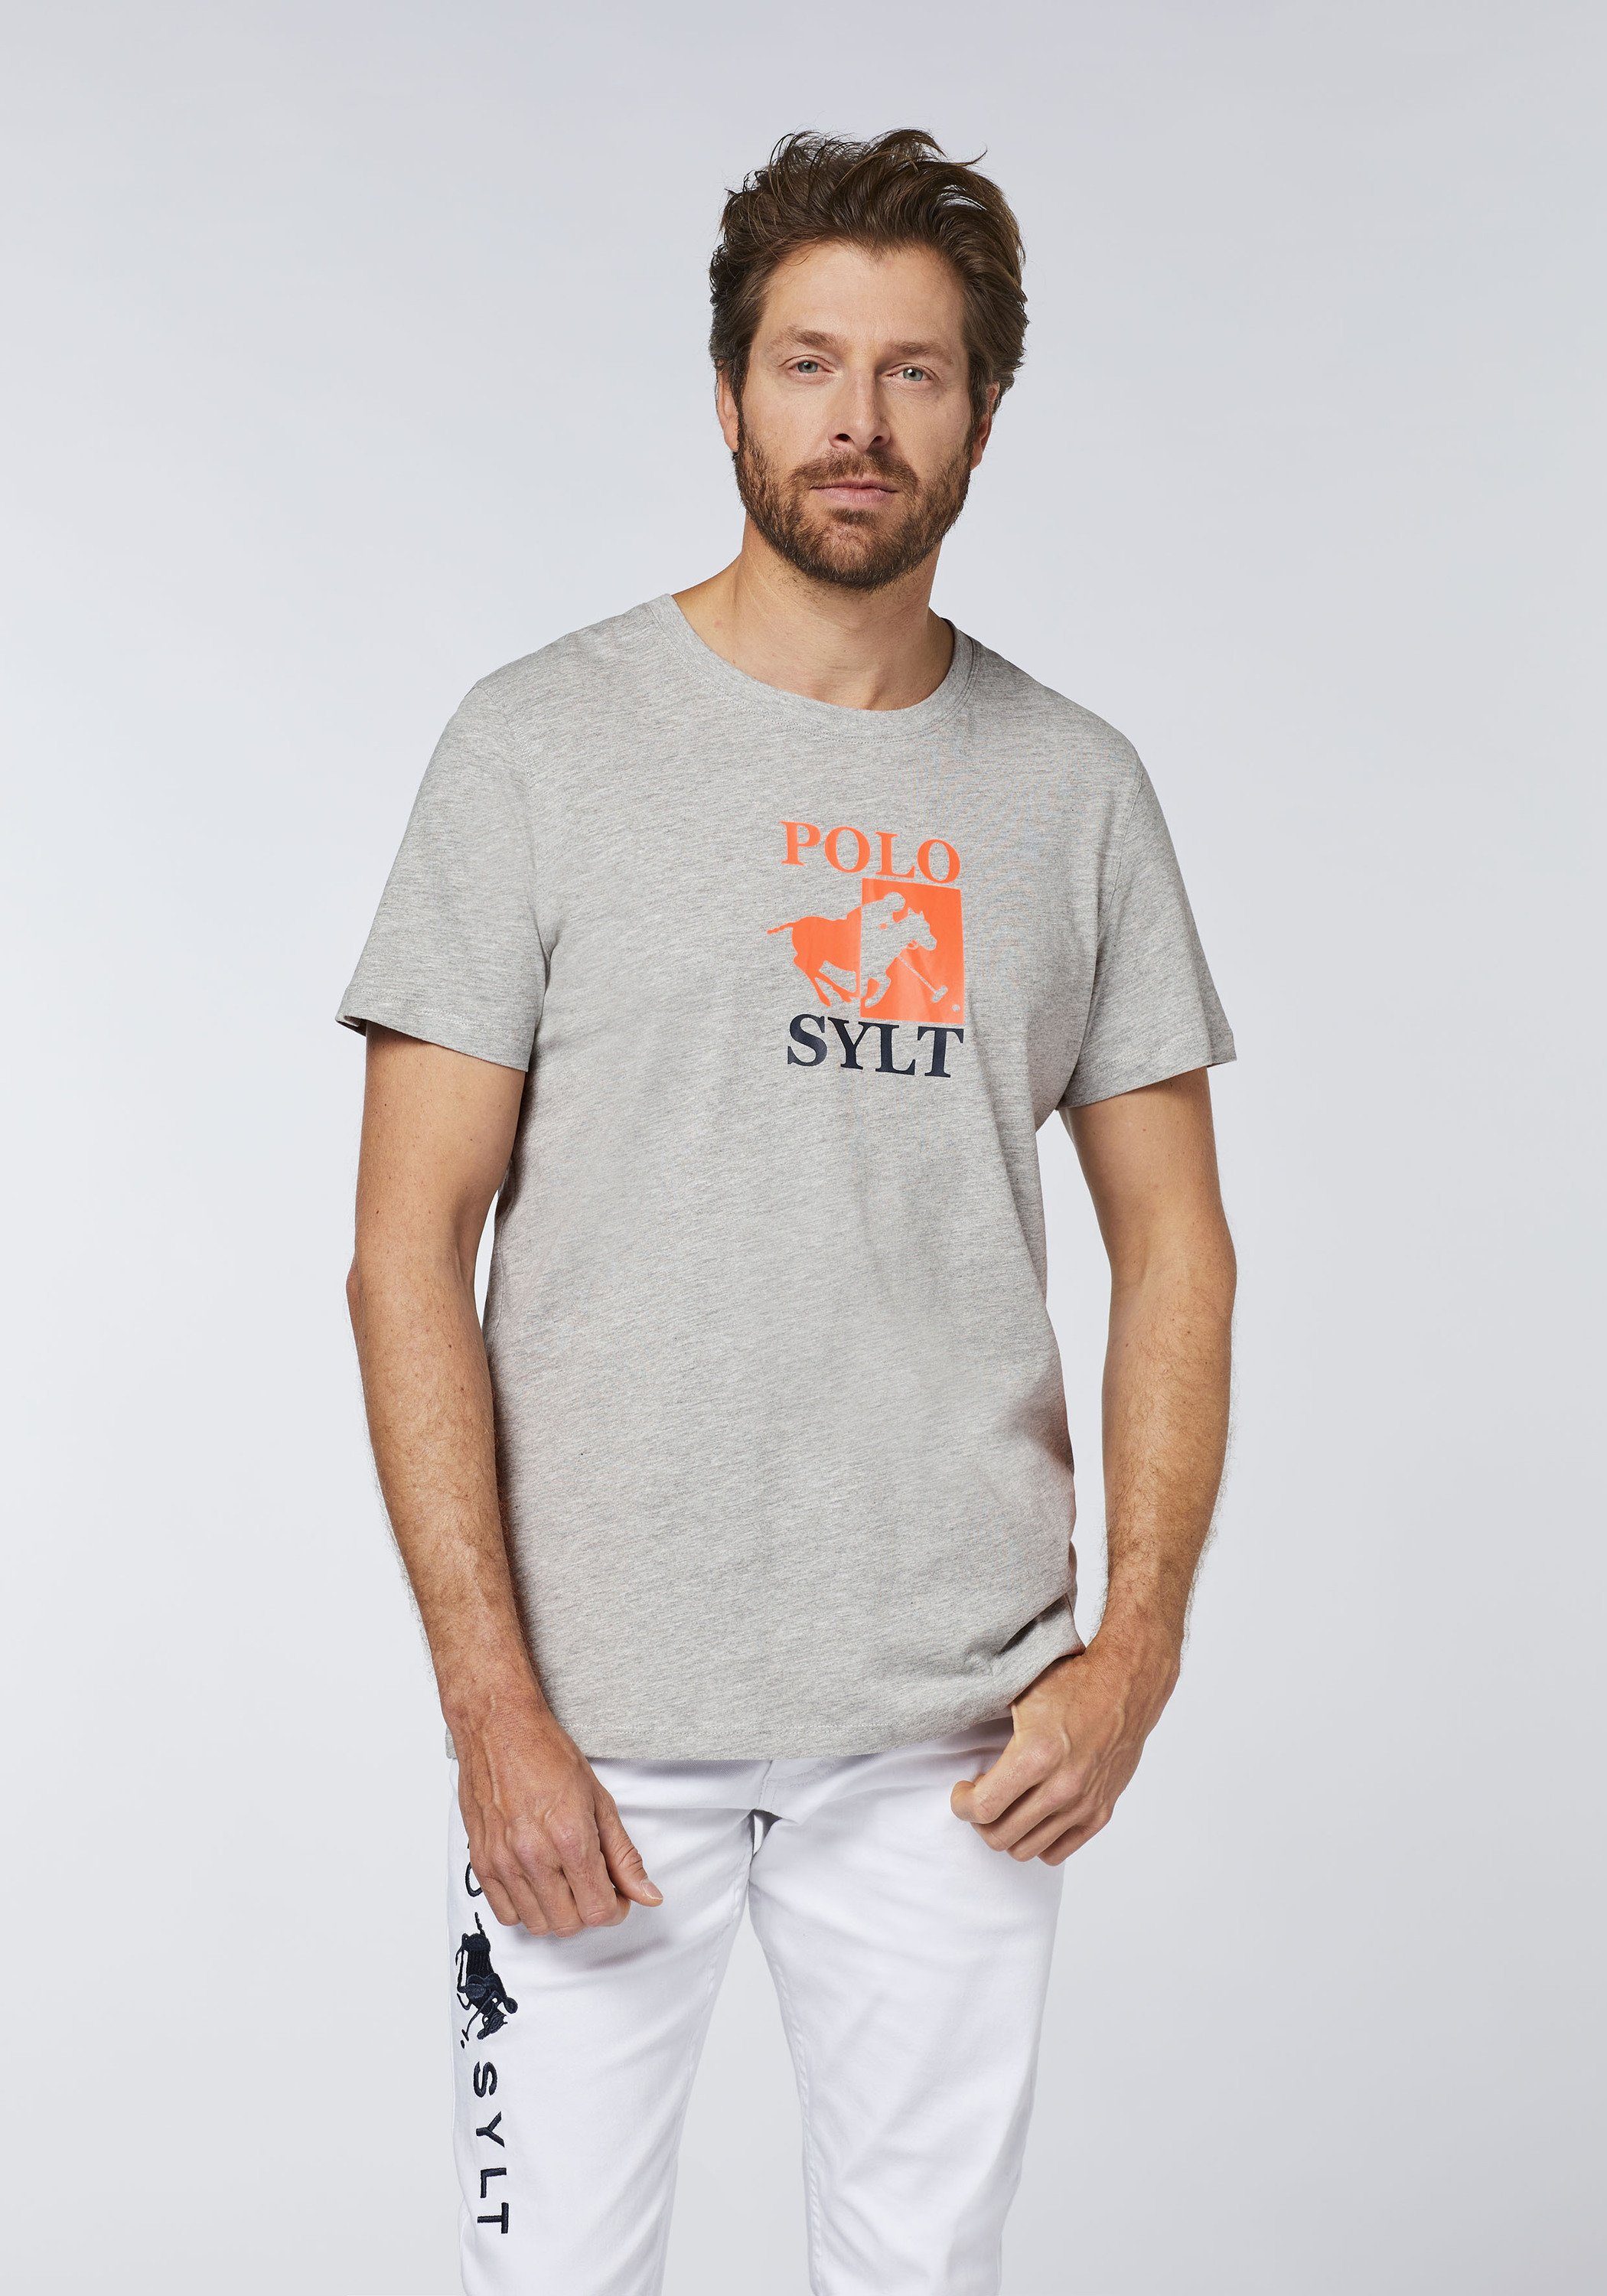 mit Neutral Gray großem Polo Sylt Print-Shirt Logoprint 17-4402M Melange